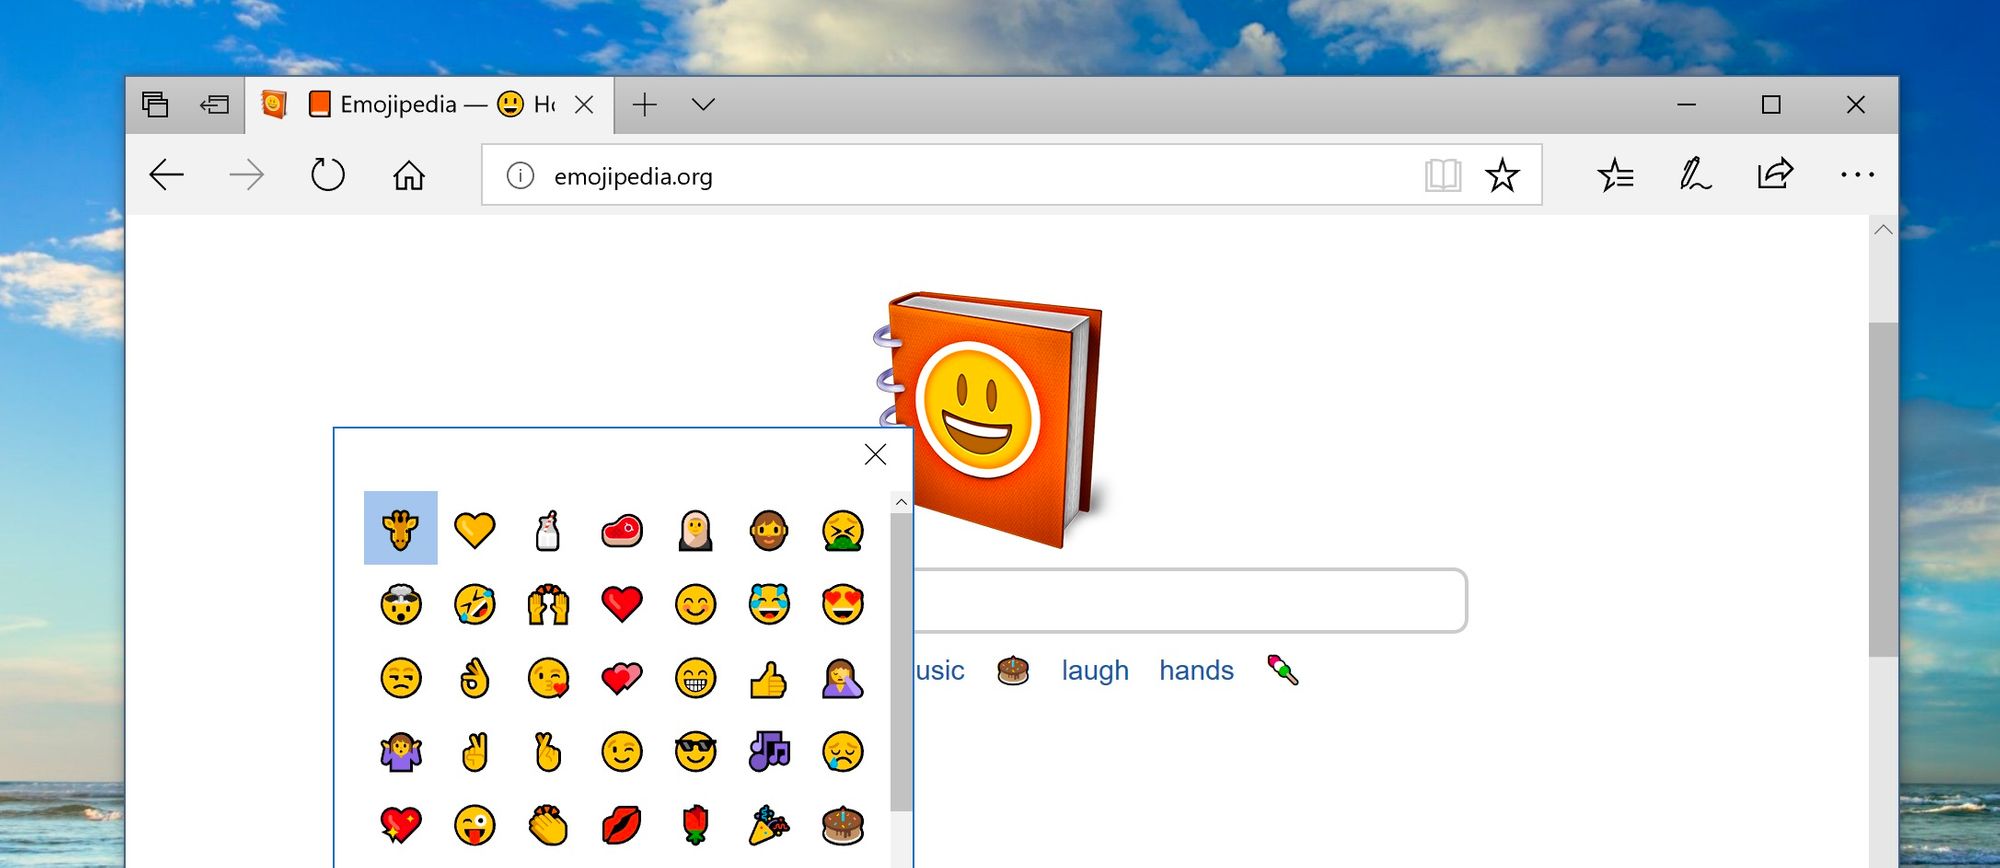 How To Use The New Windows Emoji Picker